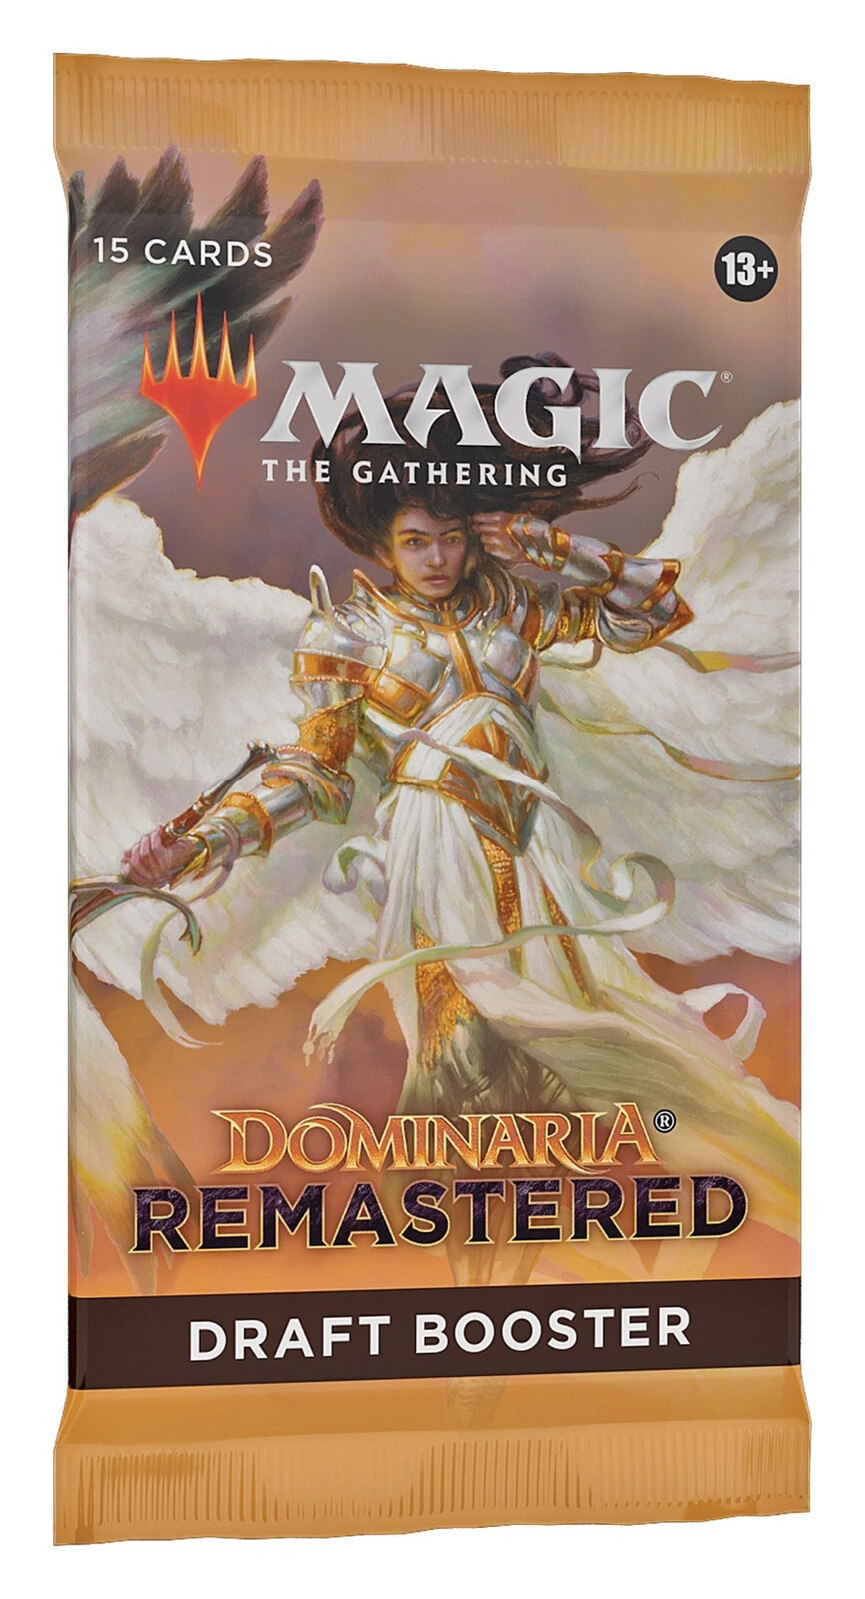 Magic: The Gathering: Dominaria Remastered Draft Booster gyűjtői kártya